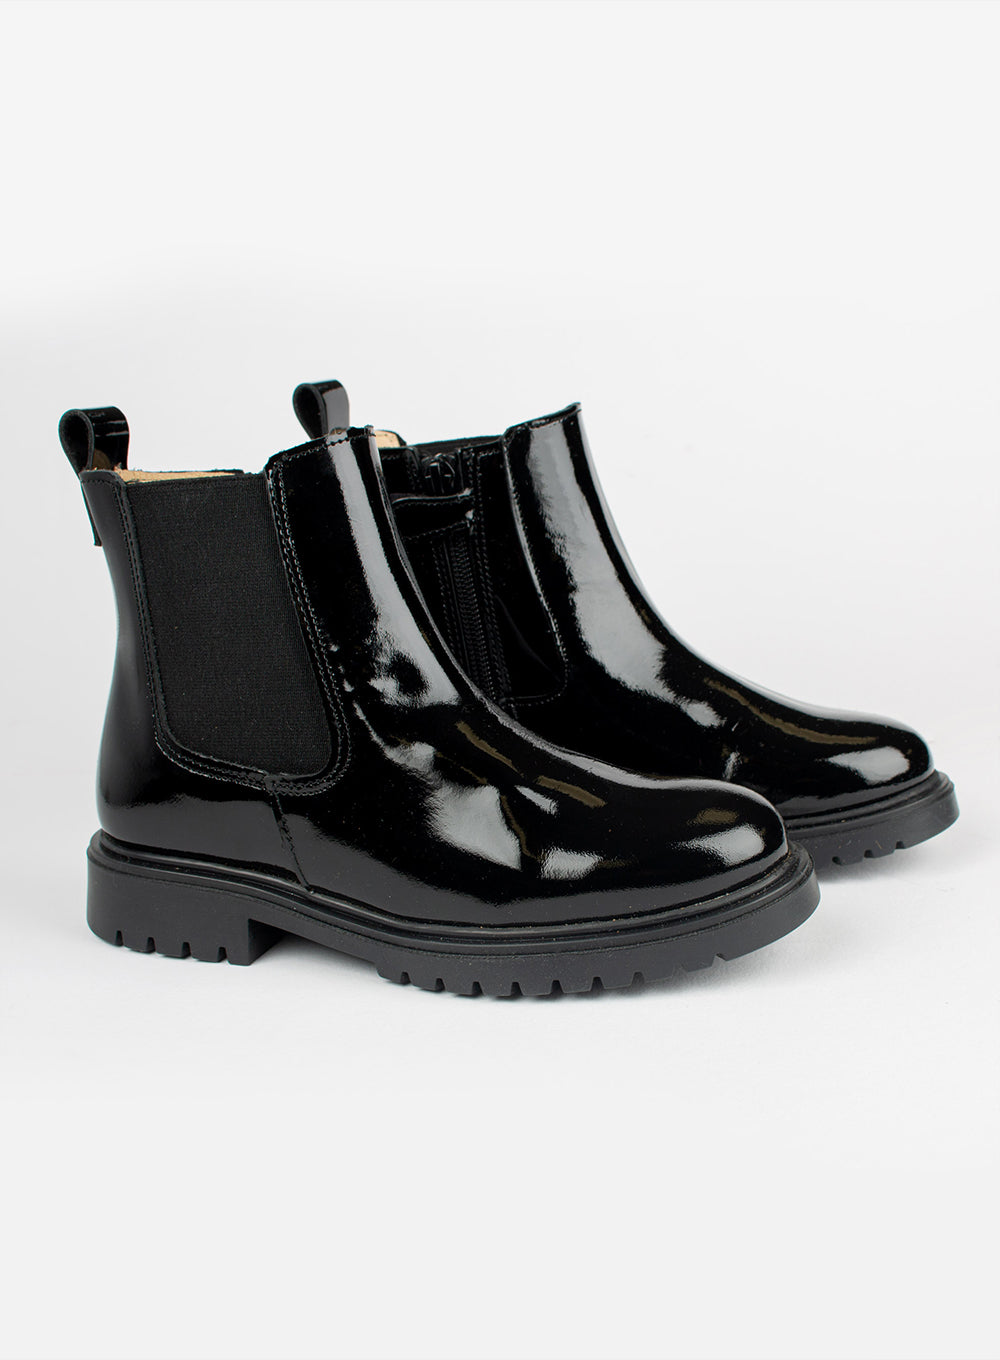 Hampton Classics Belvedere Ankle Boot in Black Patent